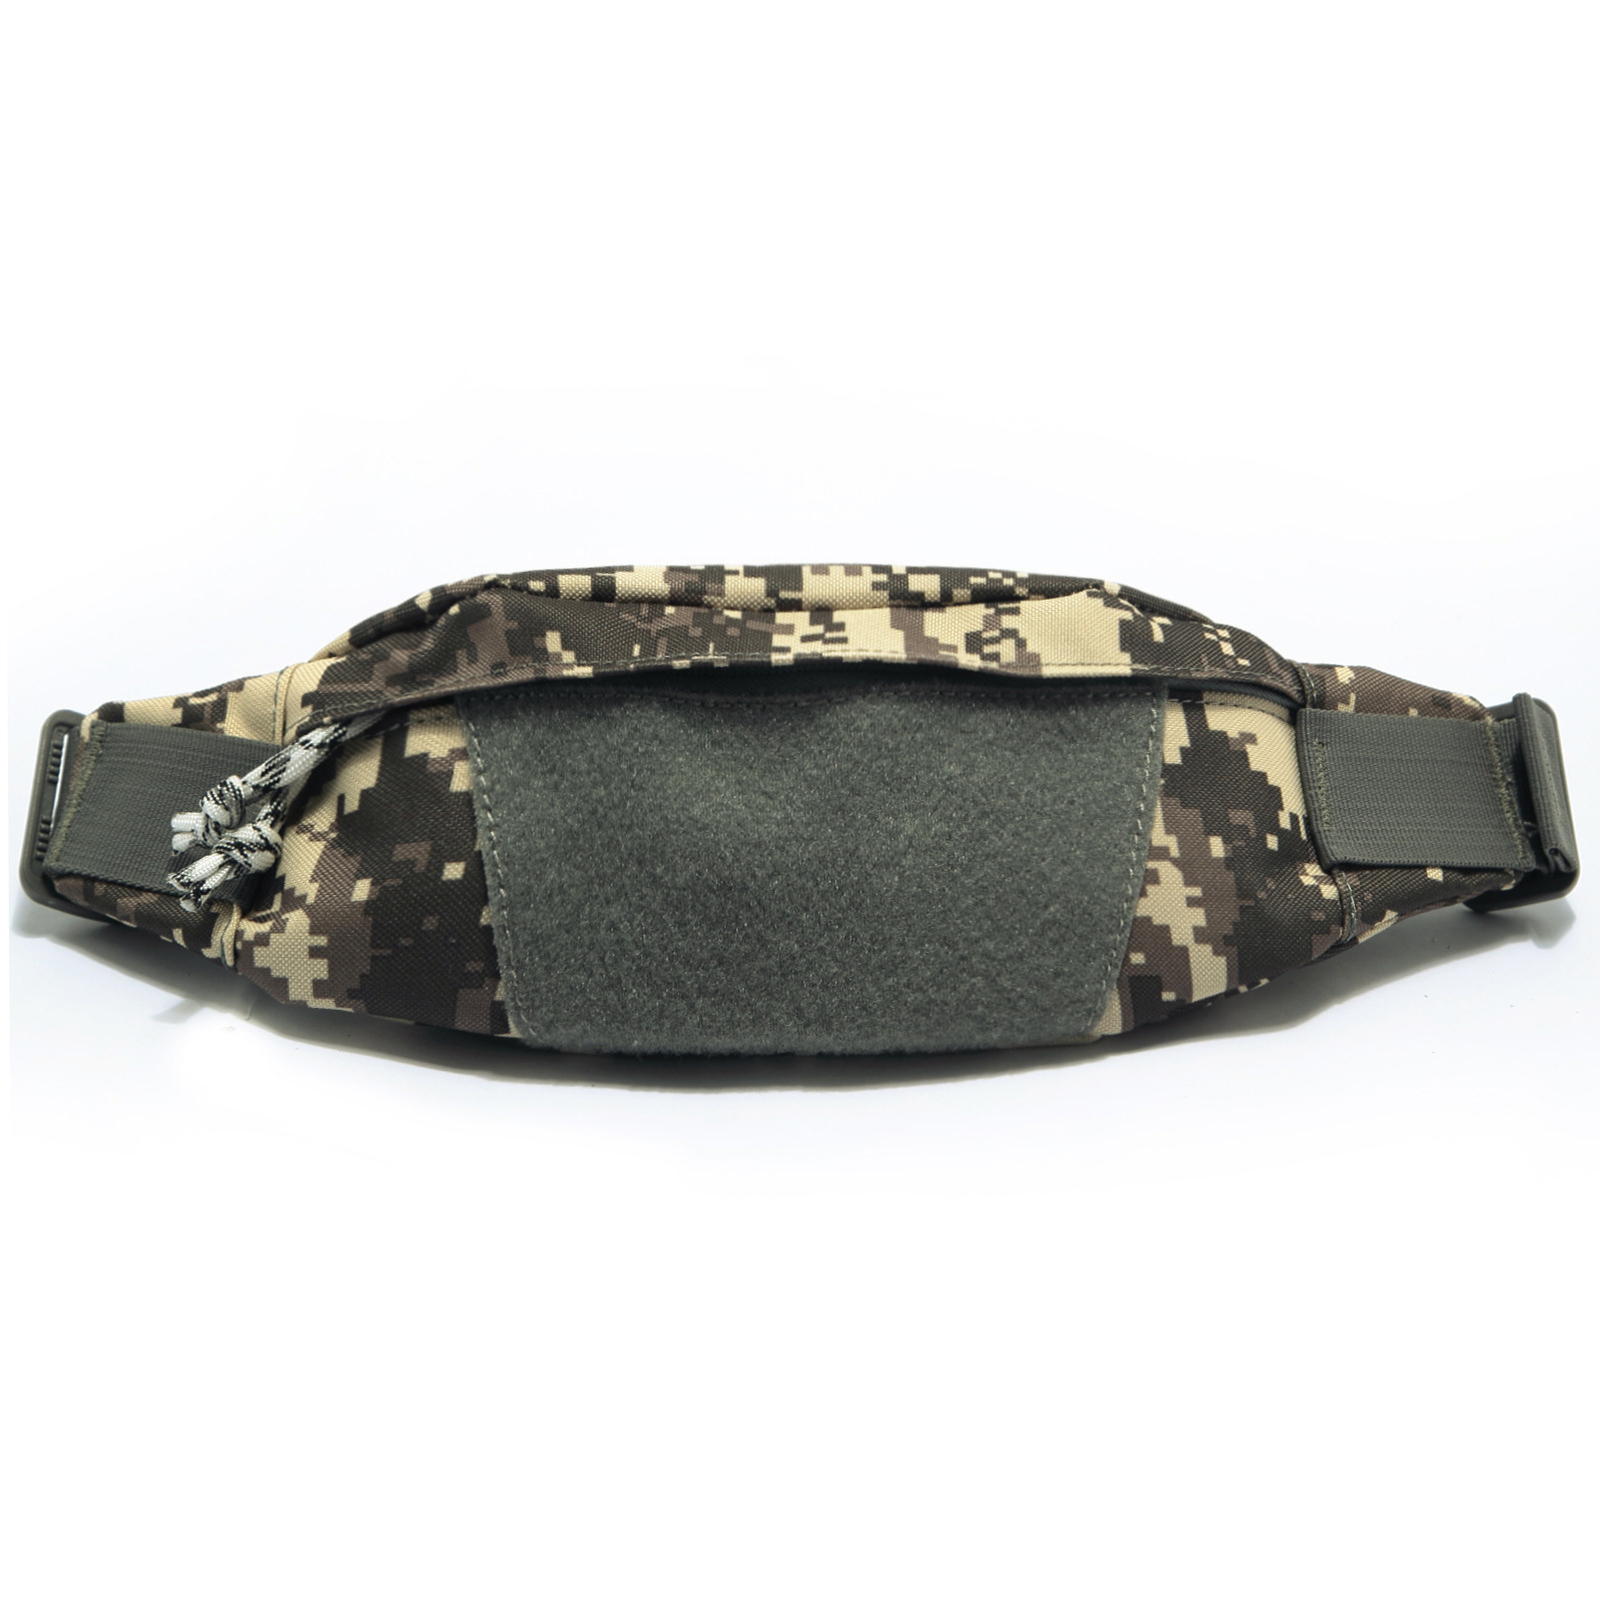 Camouflage-Tactical-Waist-Bag-Cross-Bag-Tactical-Waist-Bag-Outdoor-Fitness-Leisure-Bag-1568909-9